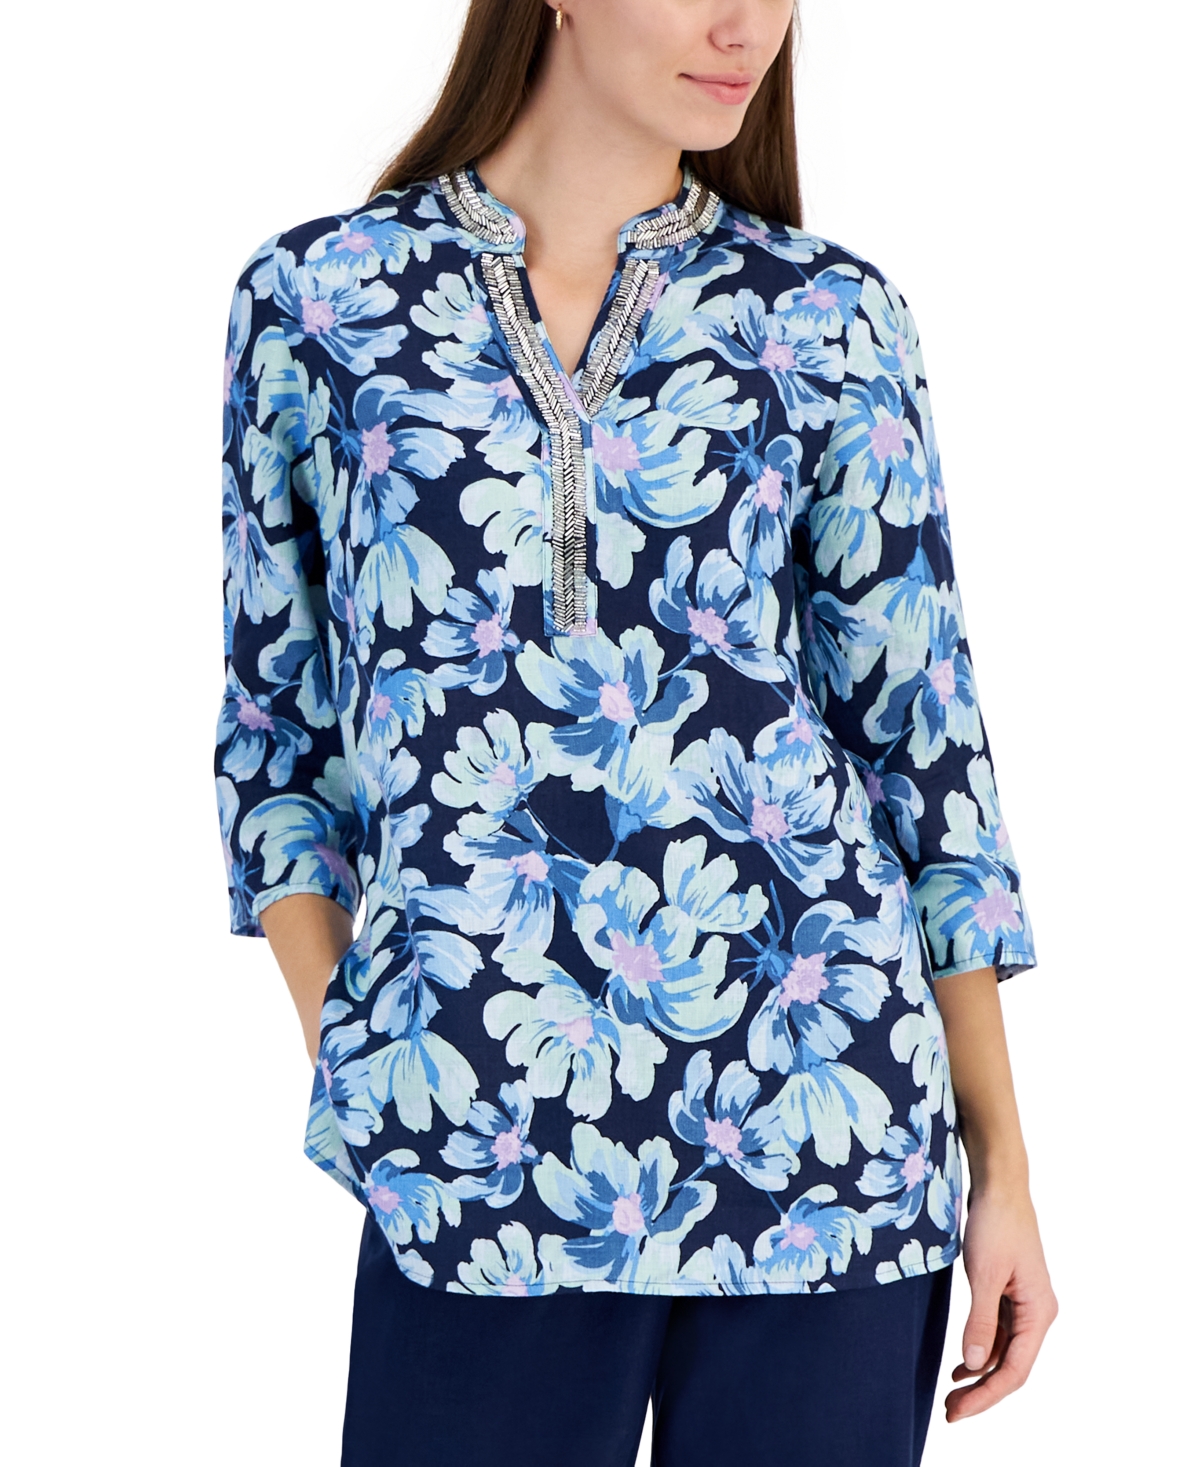 Petite 100% Linen Bloom Print Split-Neck Tunic, Created for Macy's - Intrepid Blue Combo